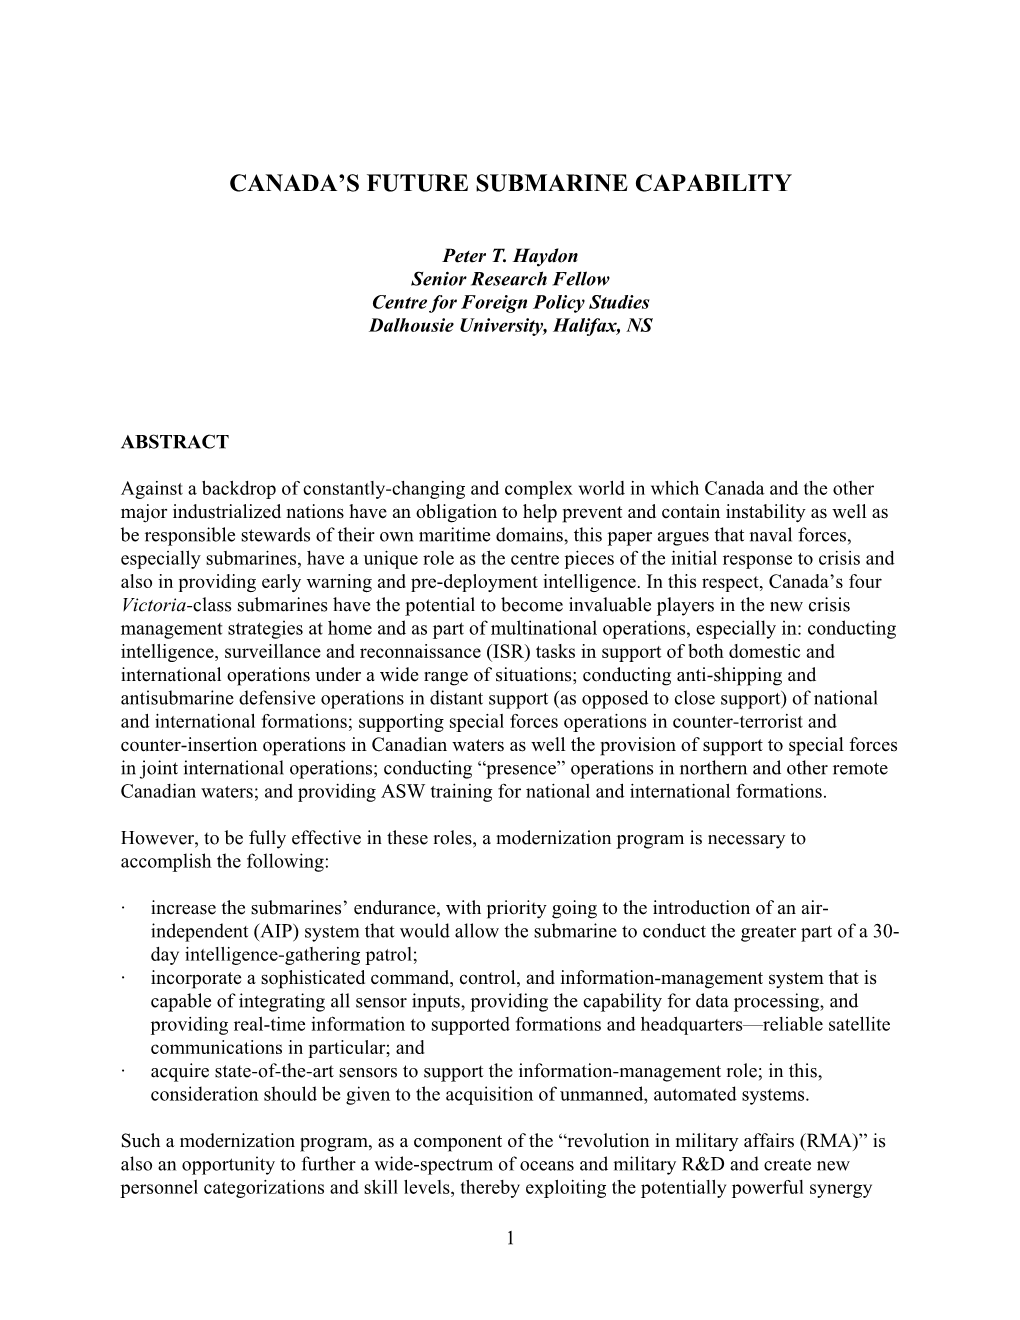 Canada's Future Submarine Capability